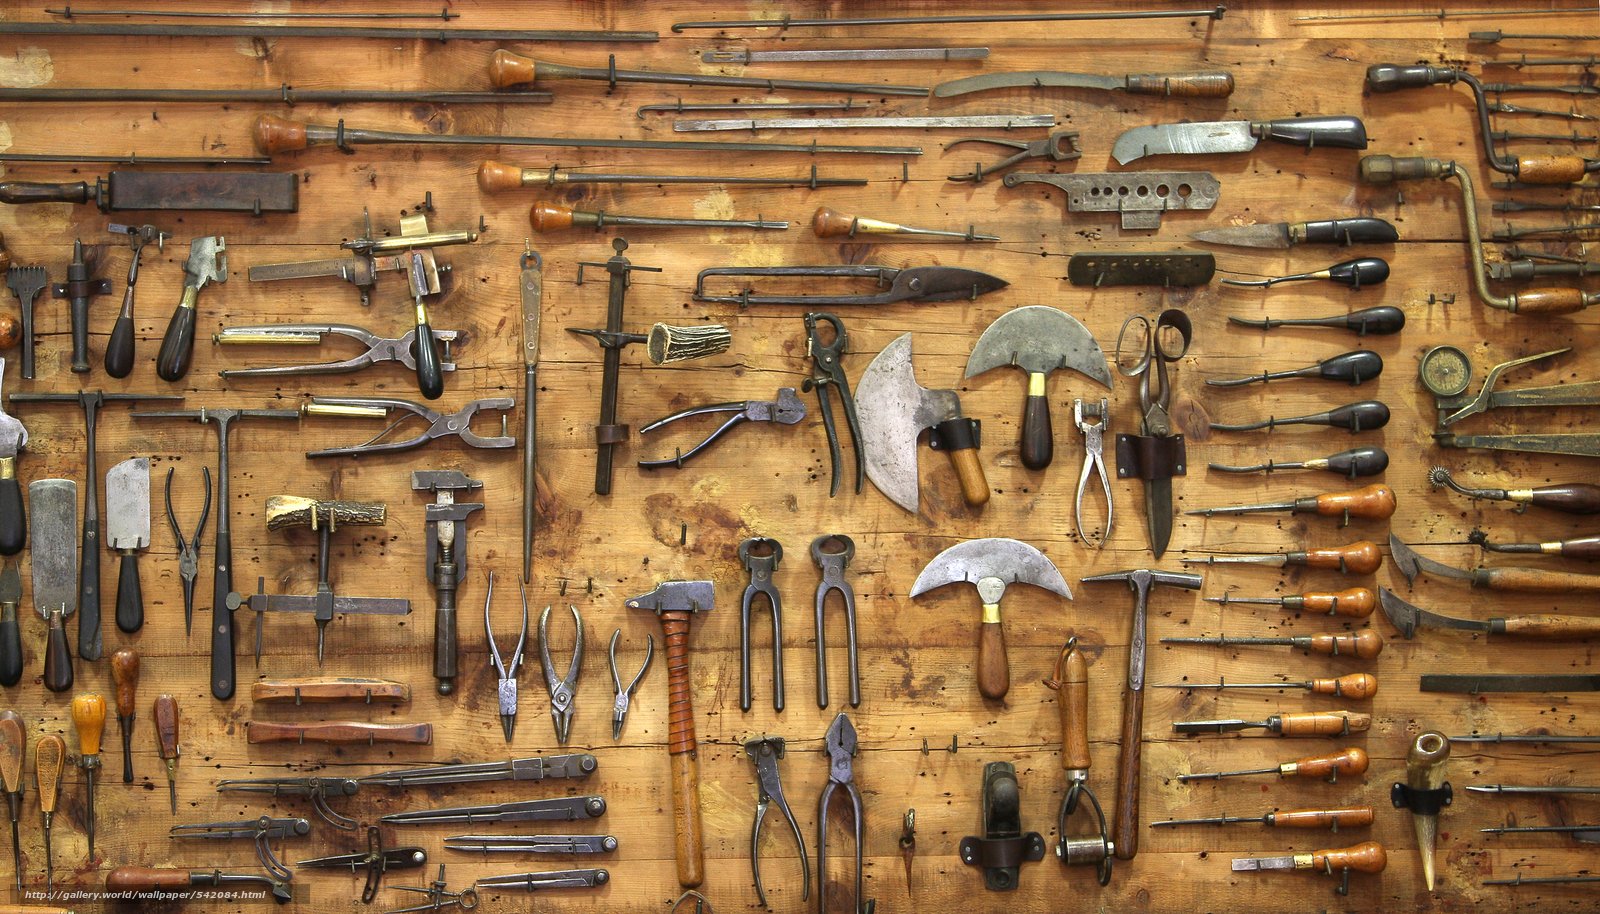 Картинка: много-много инструмента в гараже